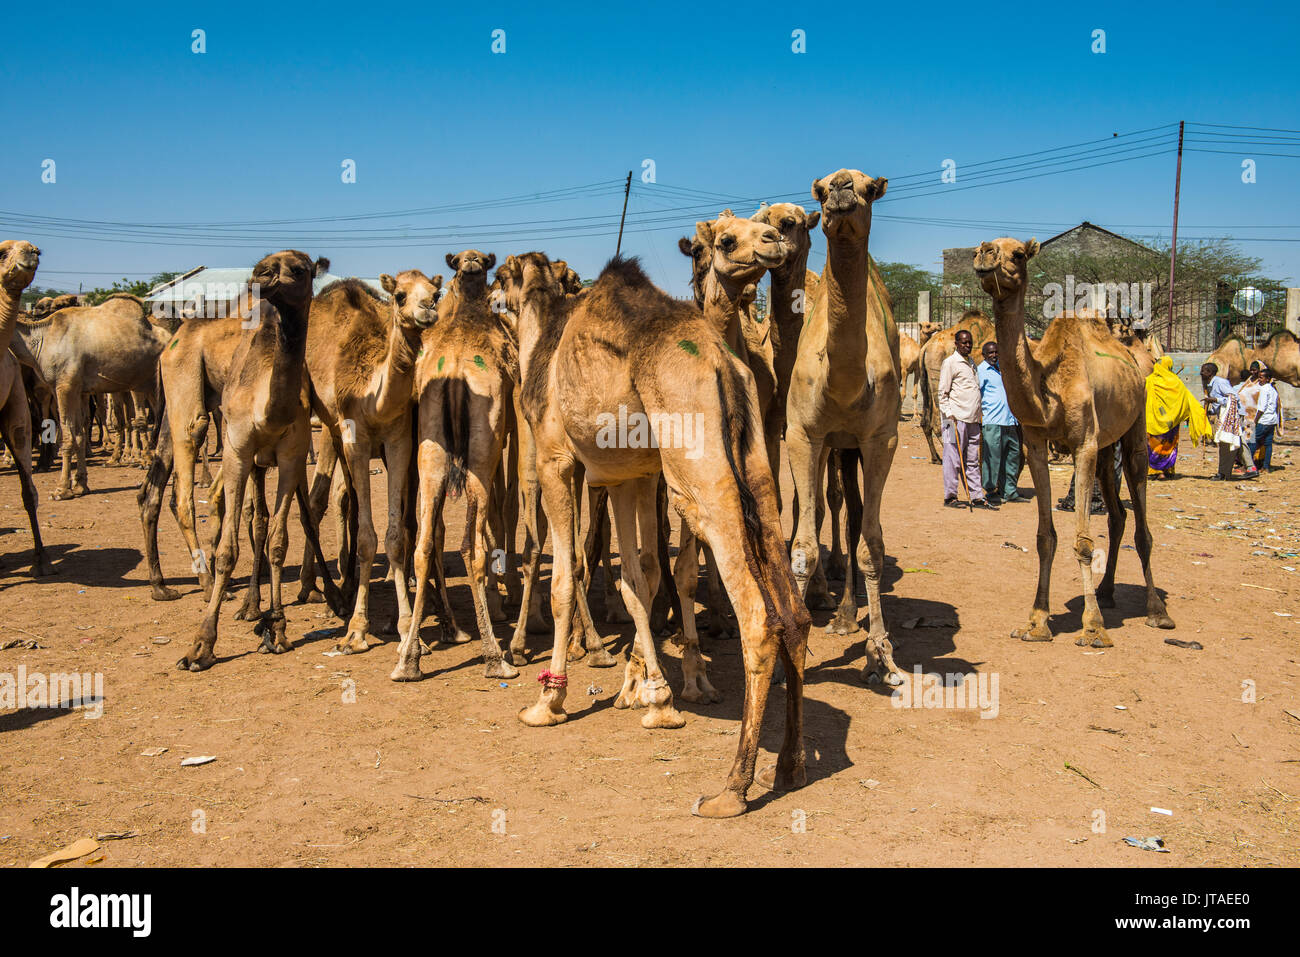 Camels at the Camel market, Hargeisa, Somaliland, Somalia, Africa Stock Photo